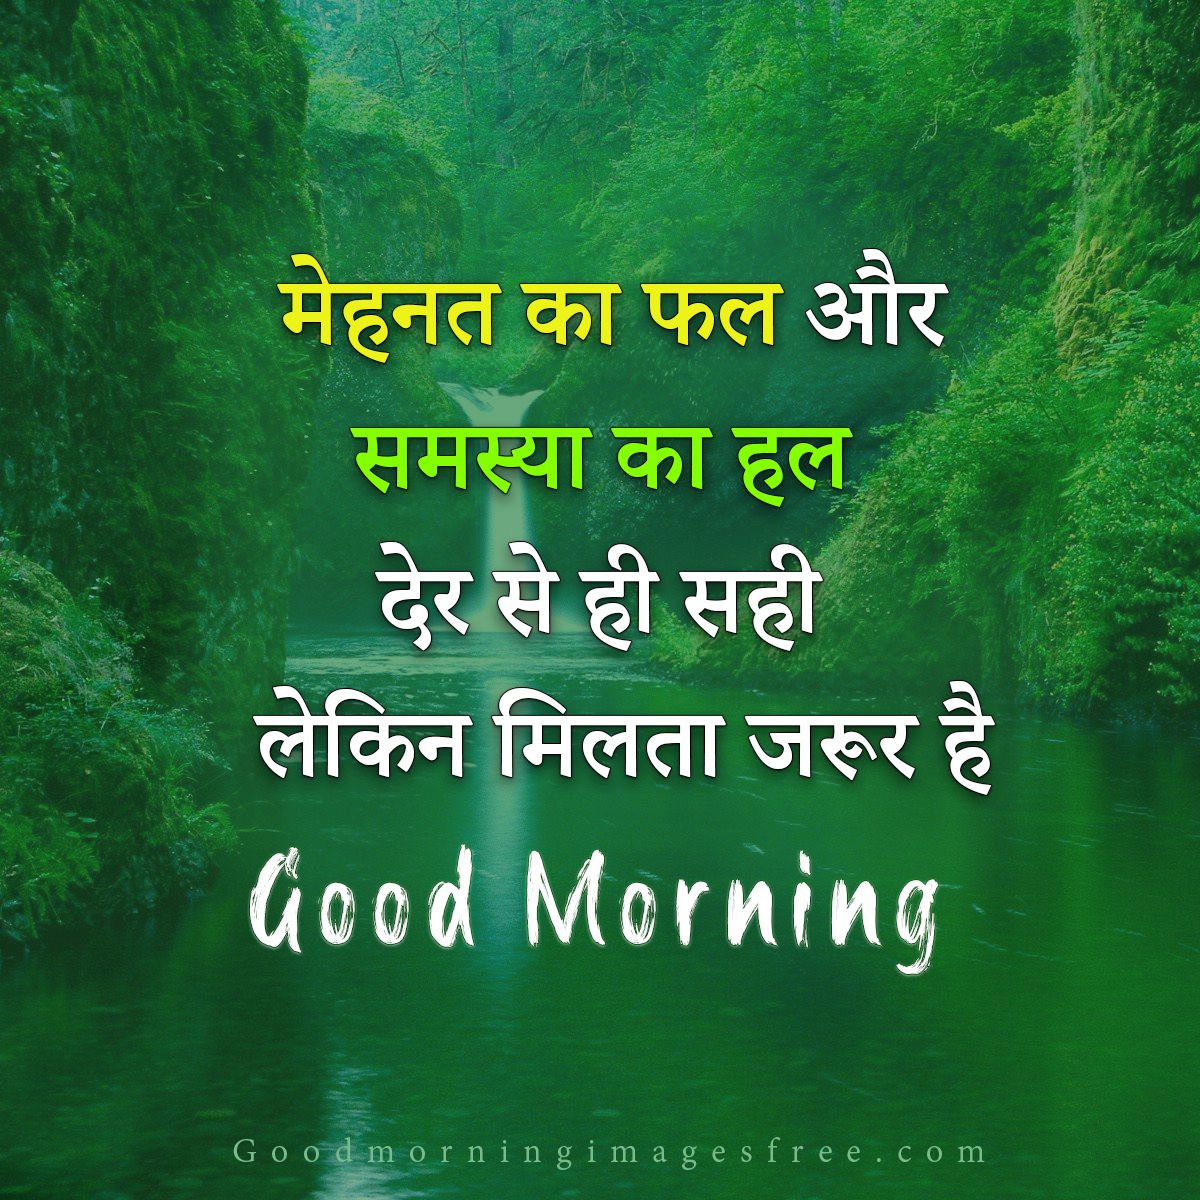 512+ (गुड मॉर्निंग हिंदी) Good Morning Images, Quotes & Wishes in Hindi